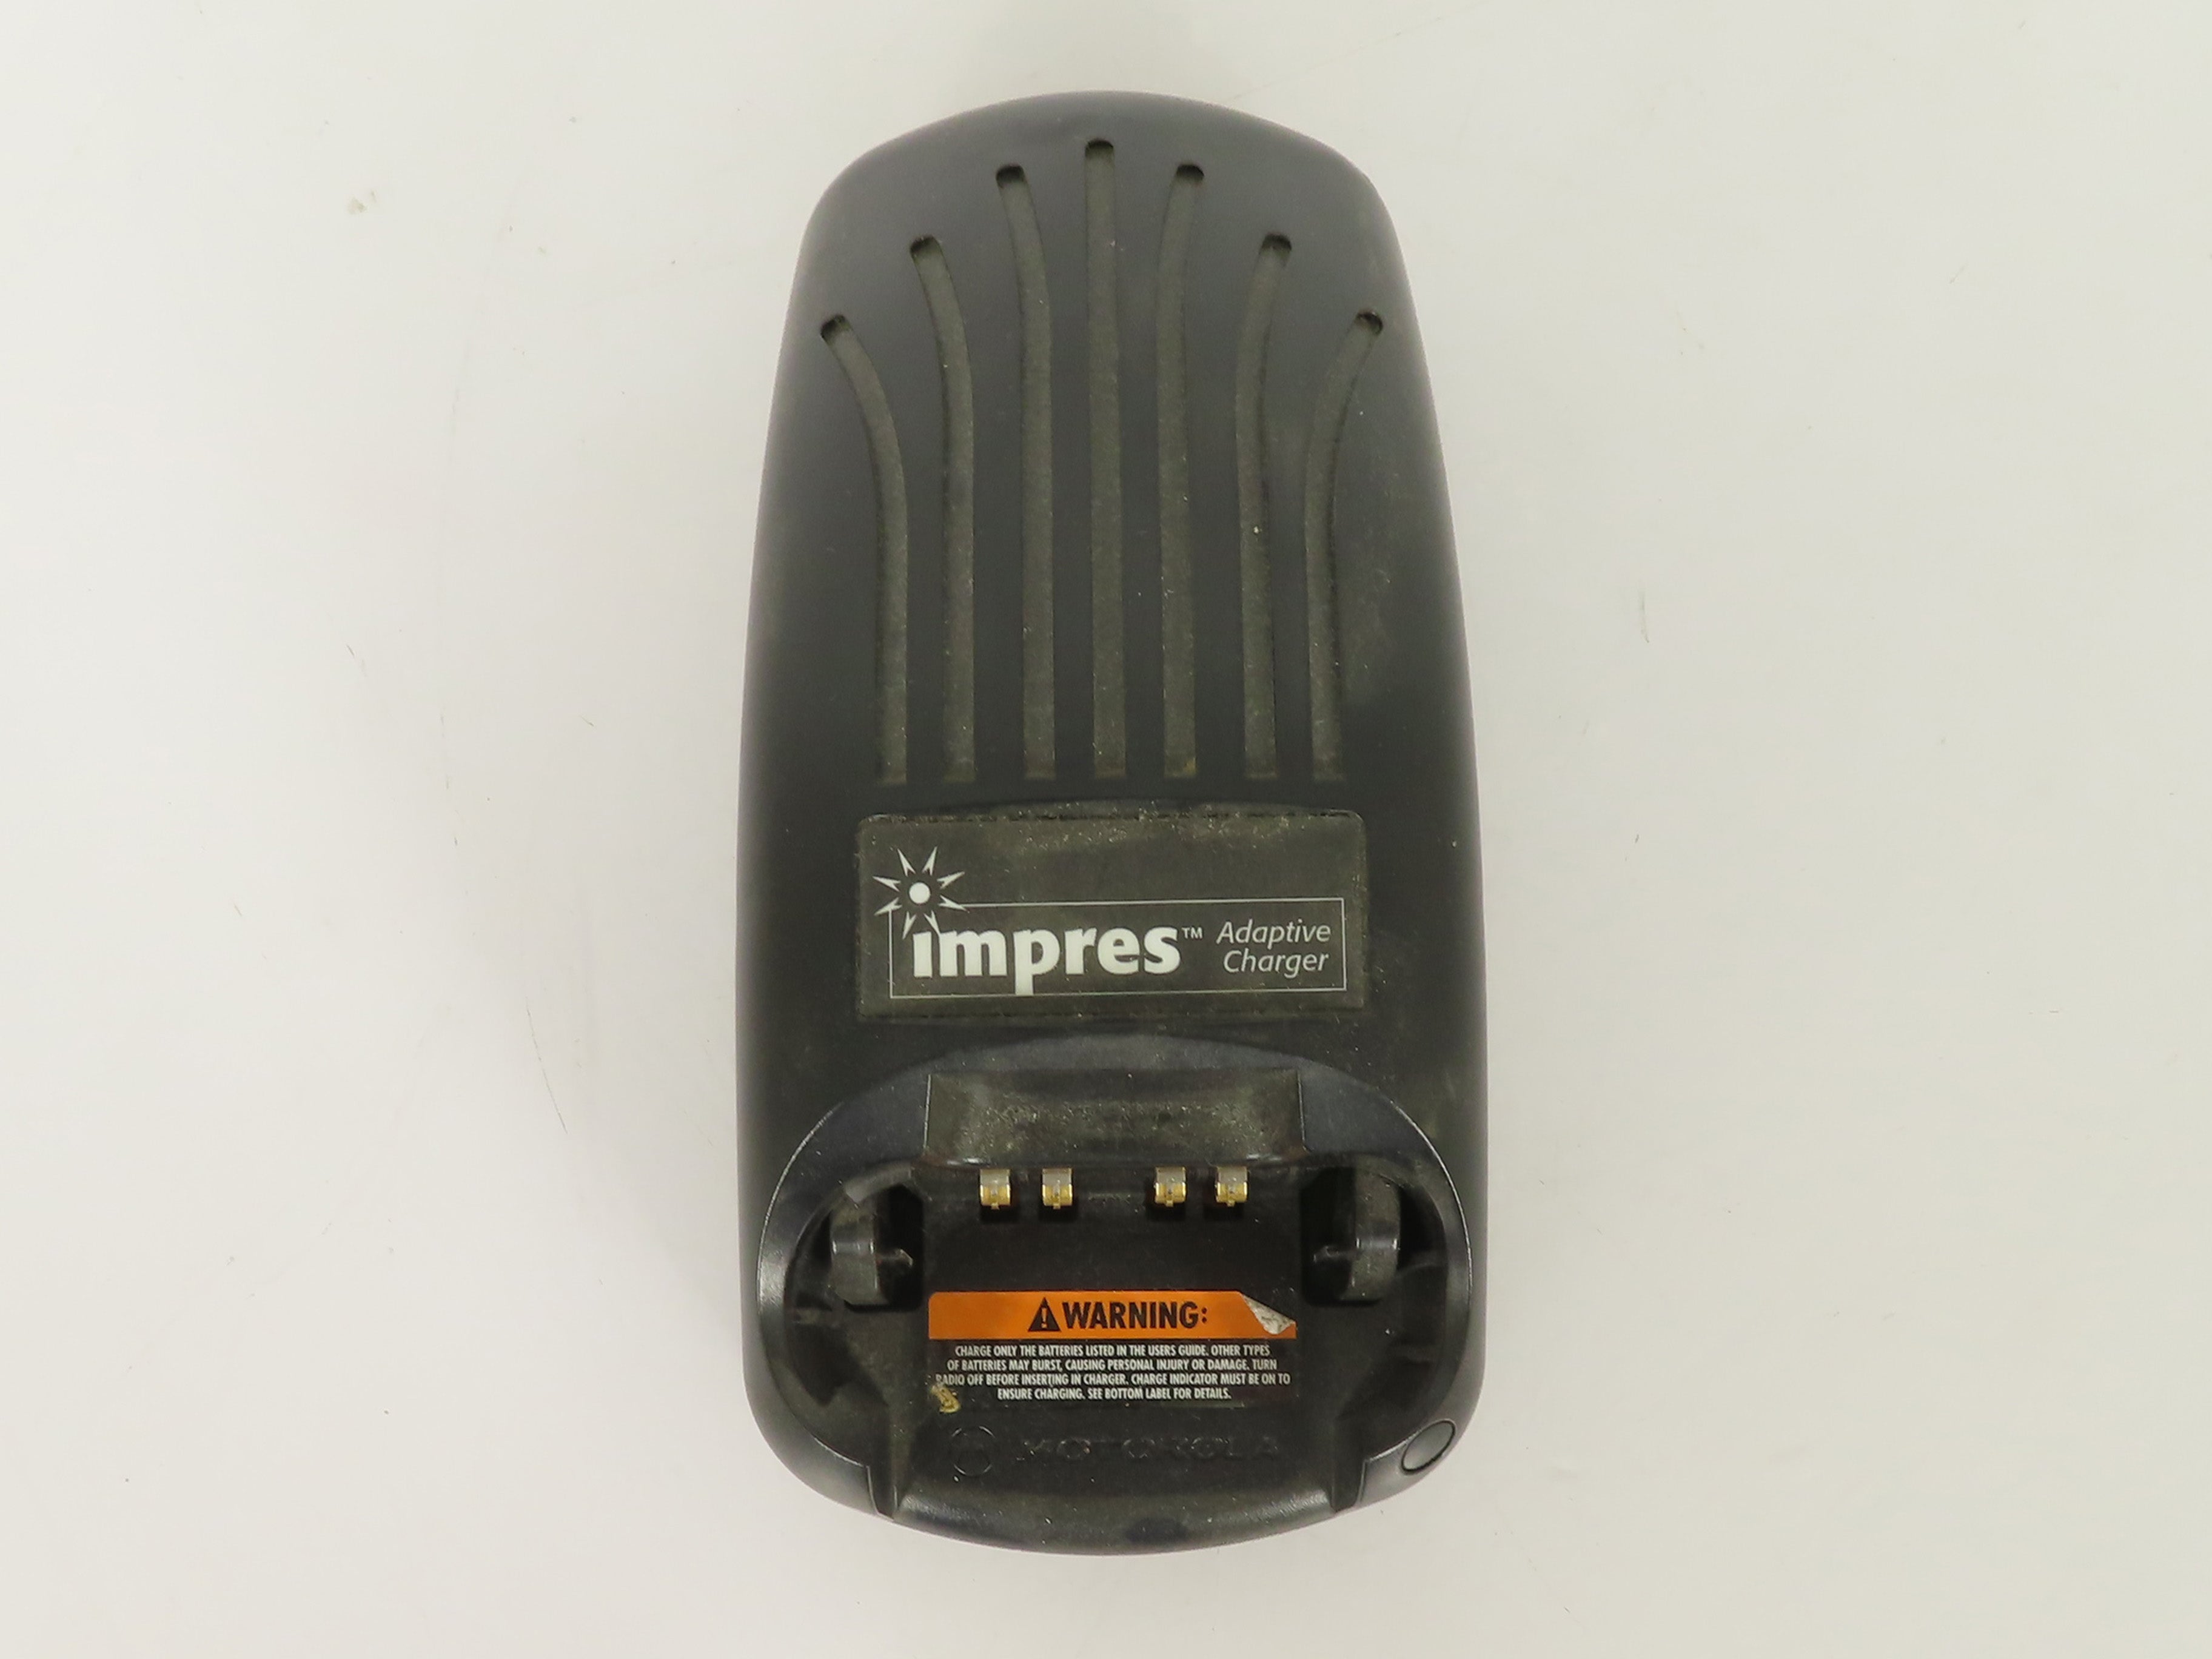 Motorola Impres Adaptive Charger WPLN4114AR